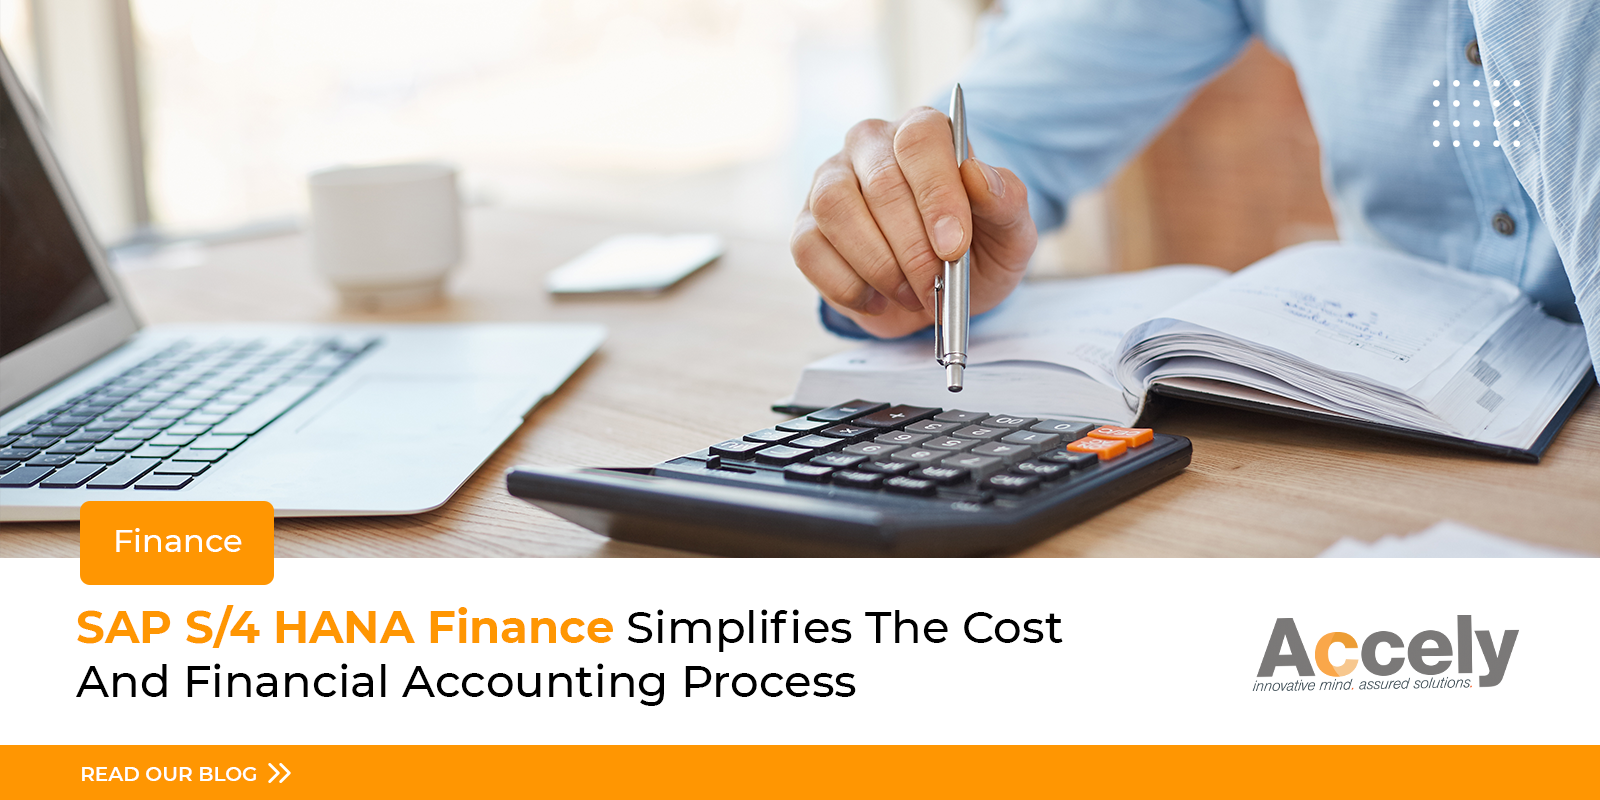 SAP S/4 HANA Finance - An Efficient Financial Module Process for All Corporates